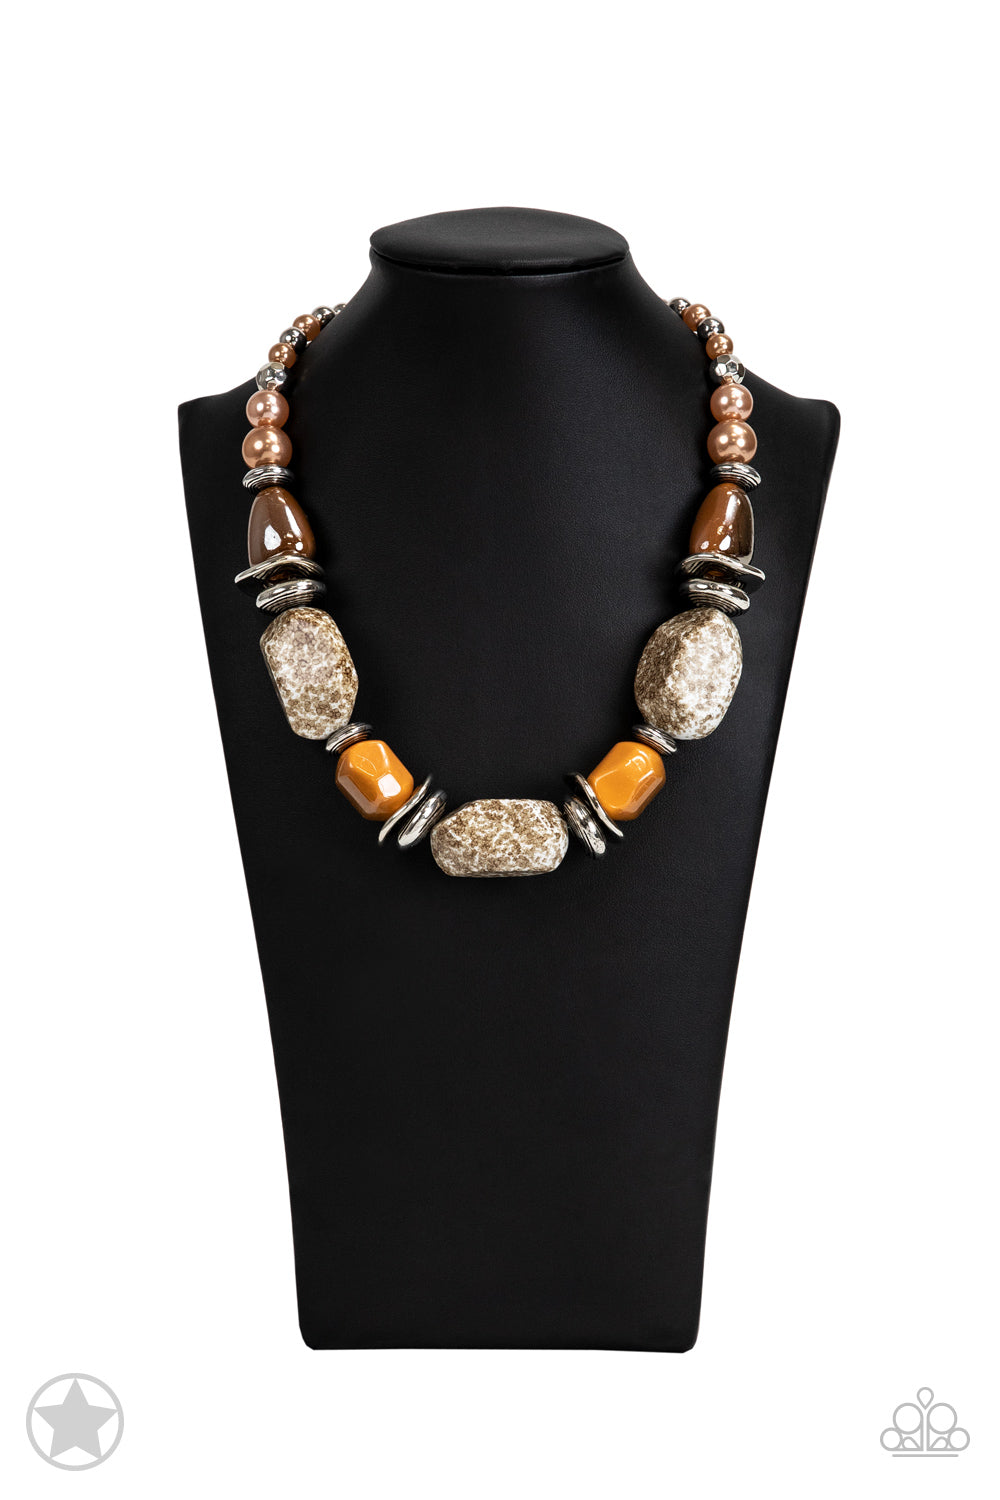 In Good Glazes - Peach/Brown necklace w/ matching bracelet